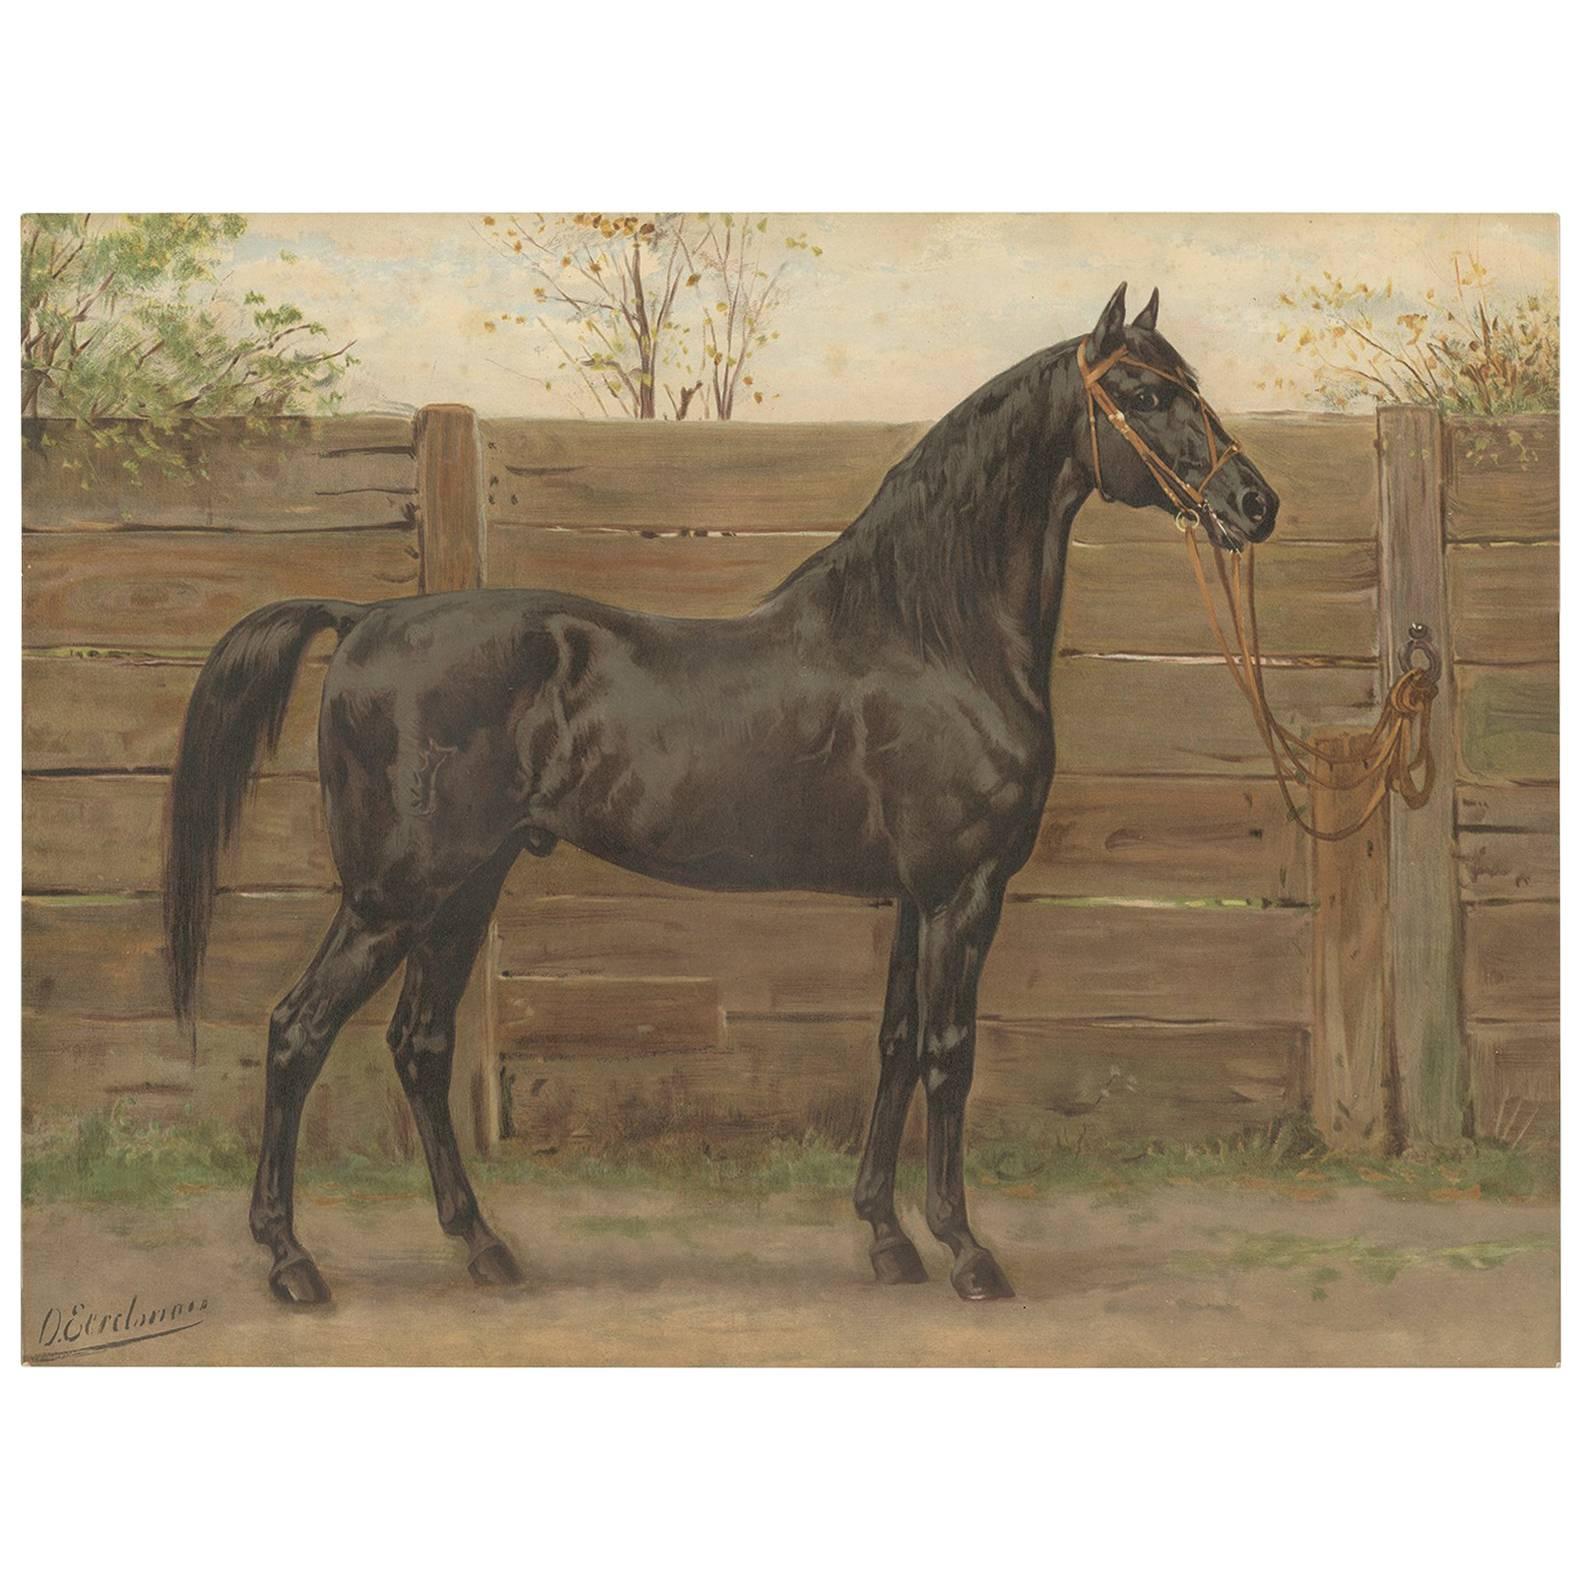 Antique Print of the Trakehner Horse by O. Eerelman, 1898